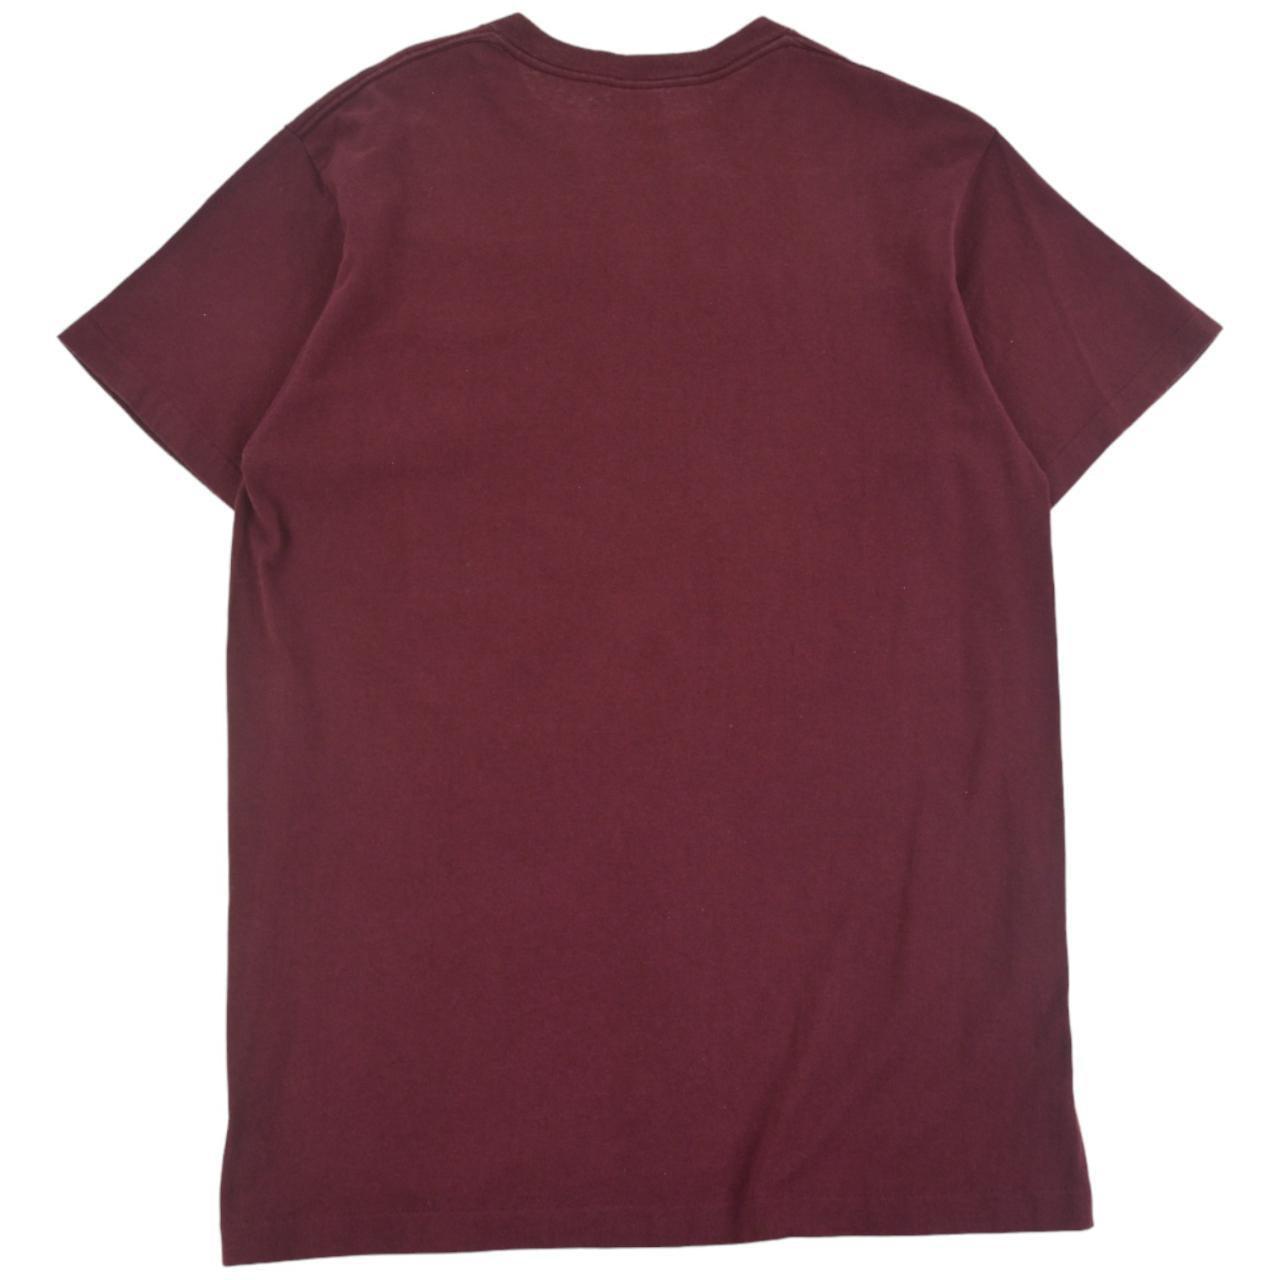 Vintage Stussy T Shirt Size L - Known Source